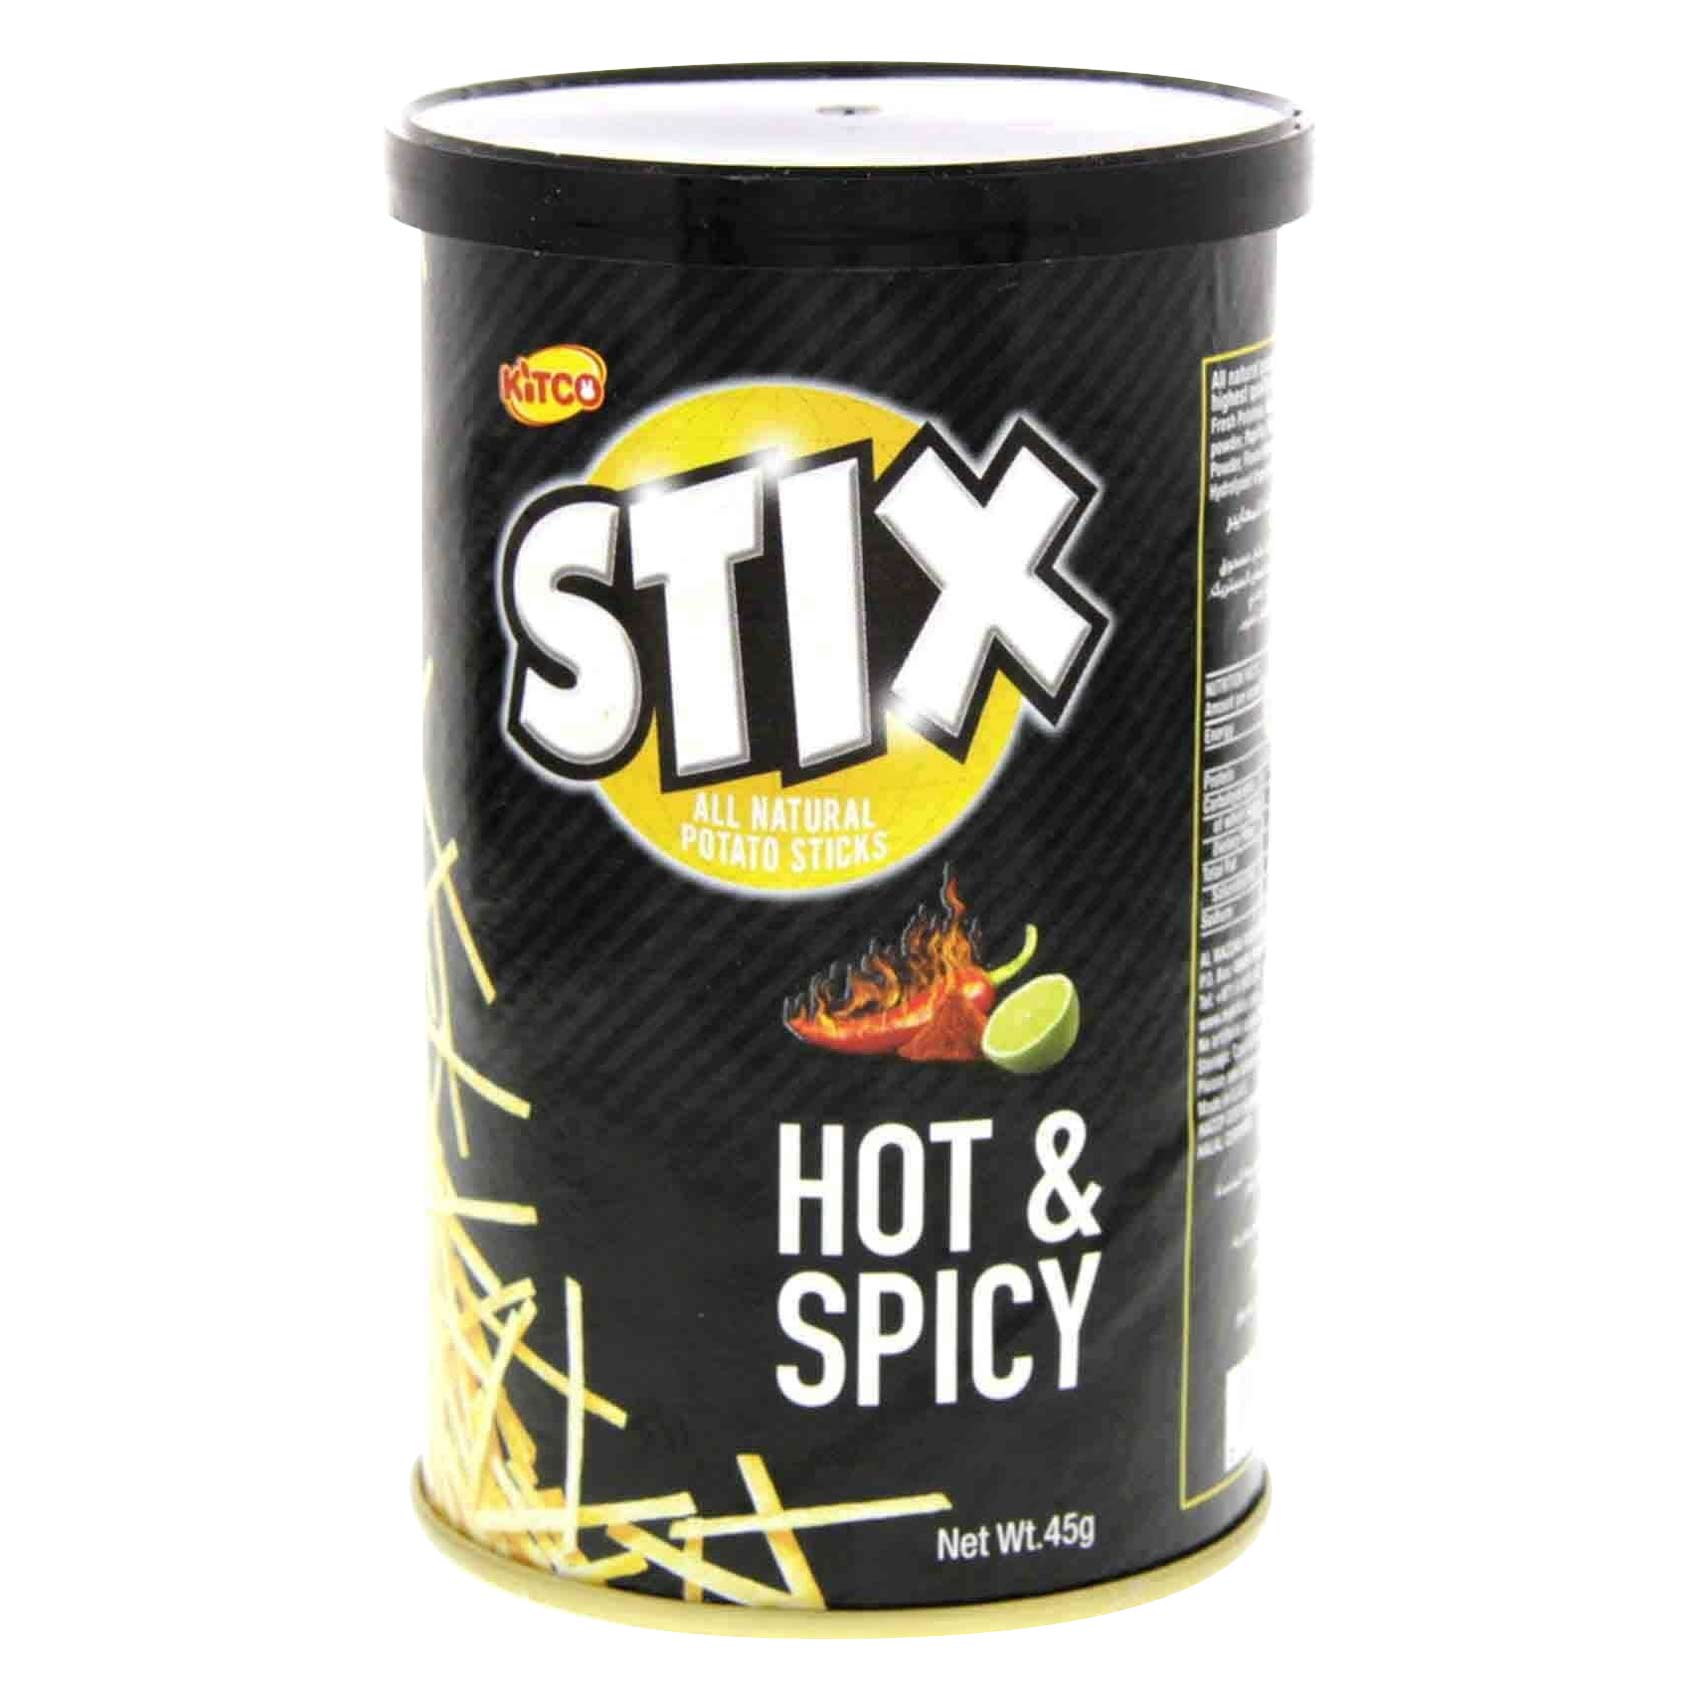 Kitco Stix Hot And Spicy Potato Sticks 45g x Pack of 6